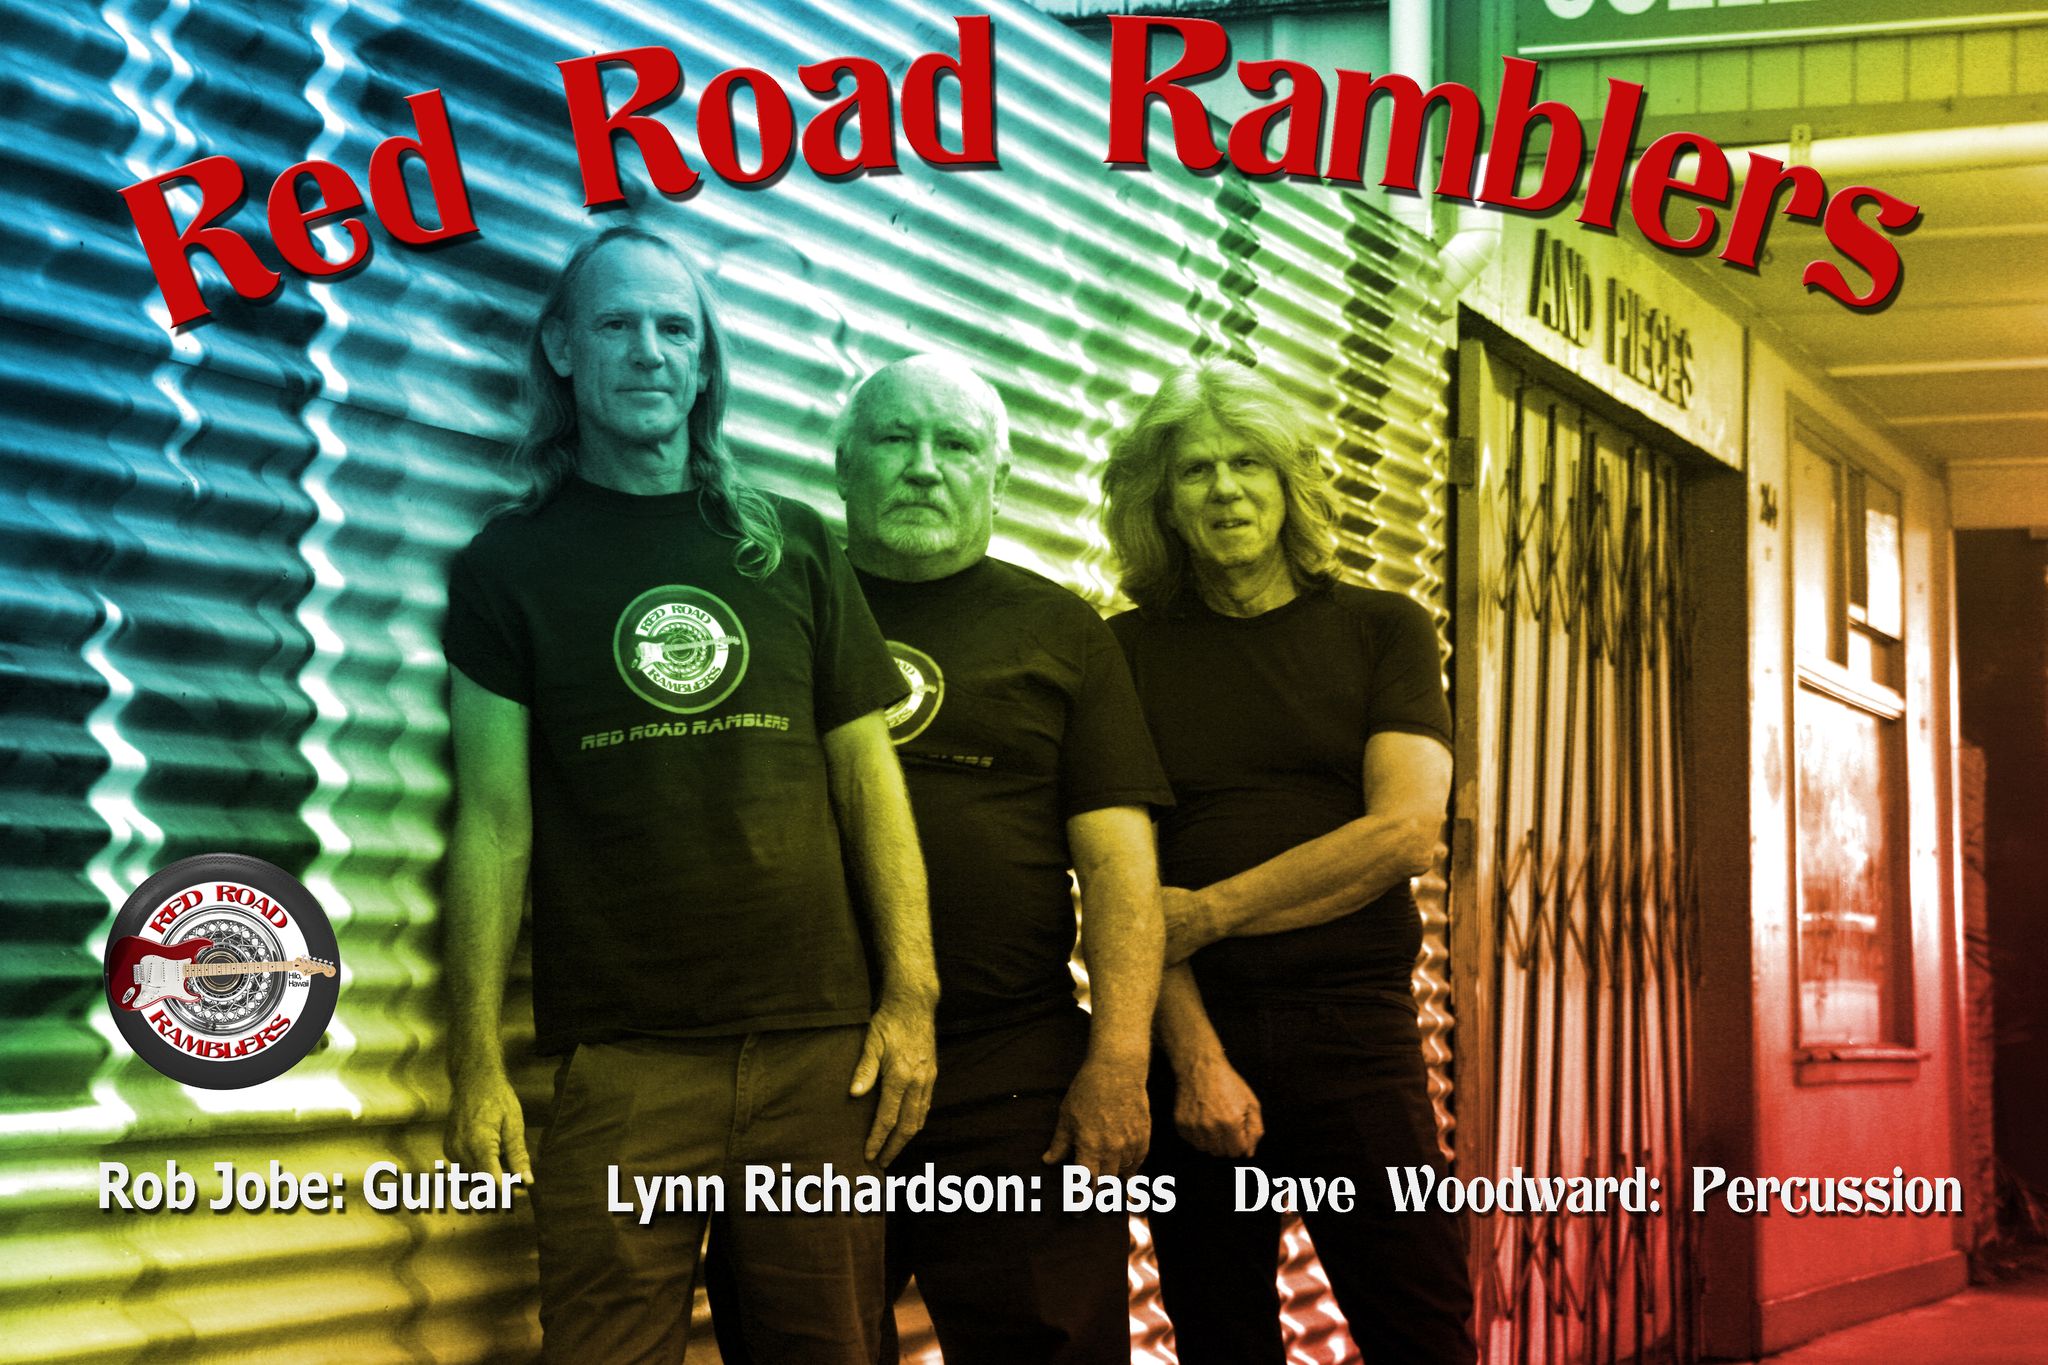 Red Road Ramblers